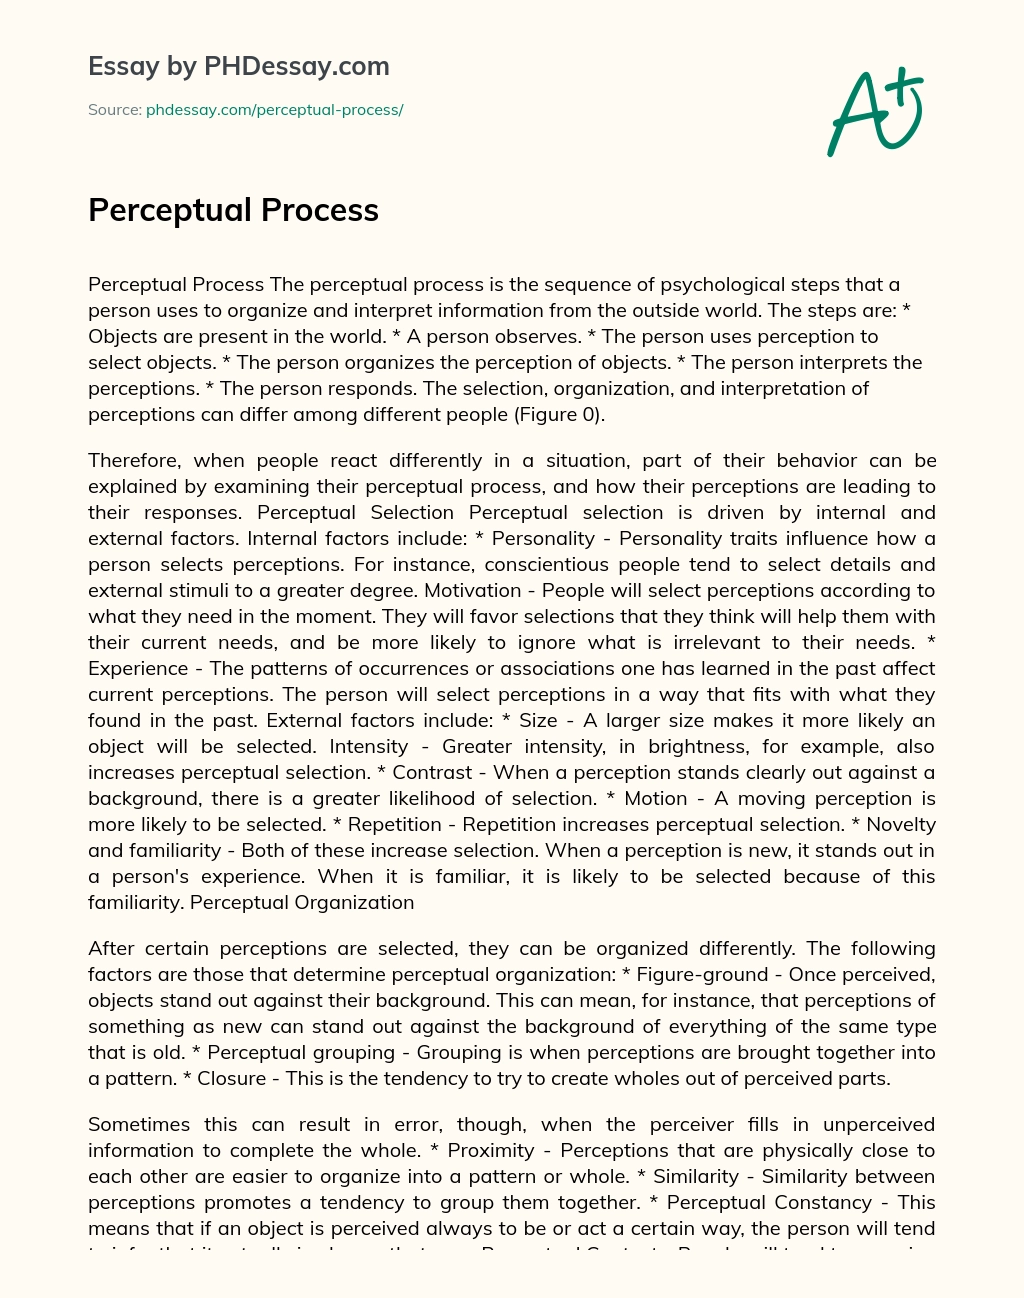 Perceptual Process and Selection essay